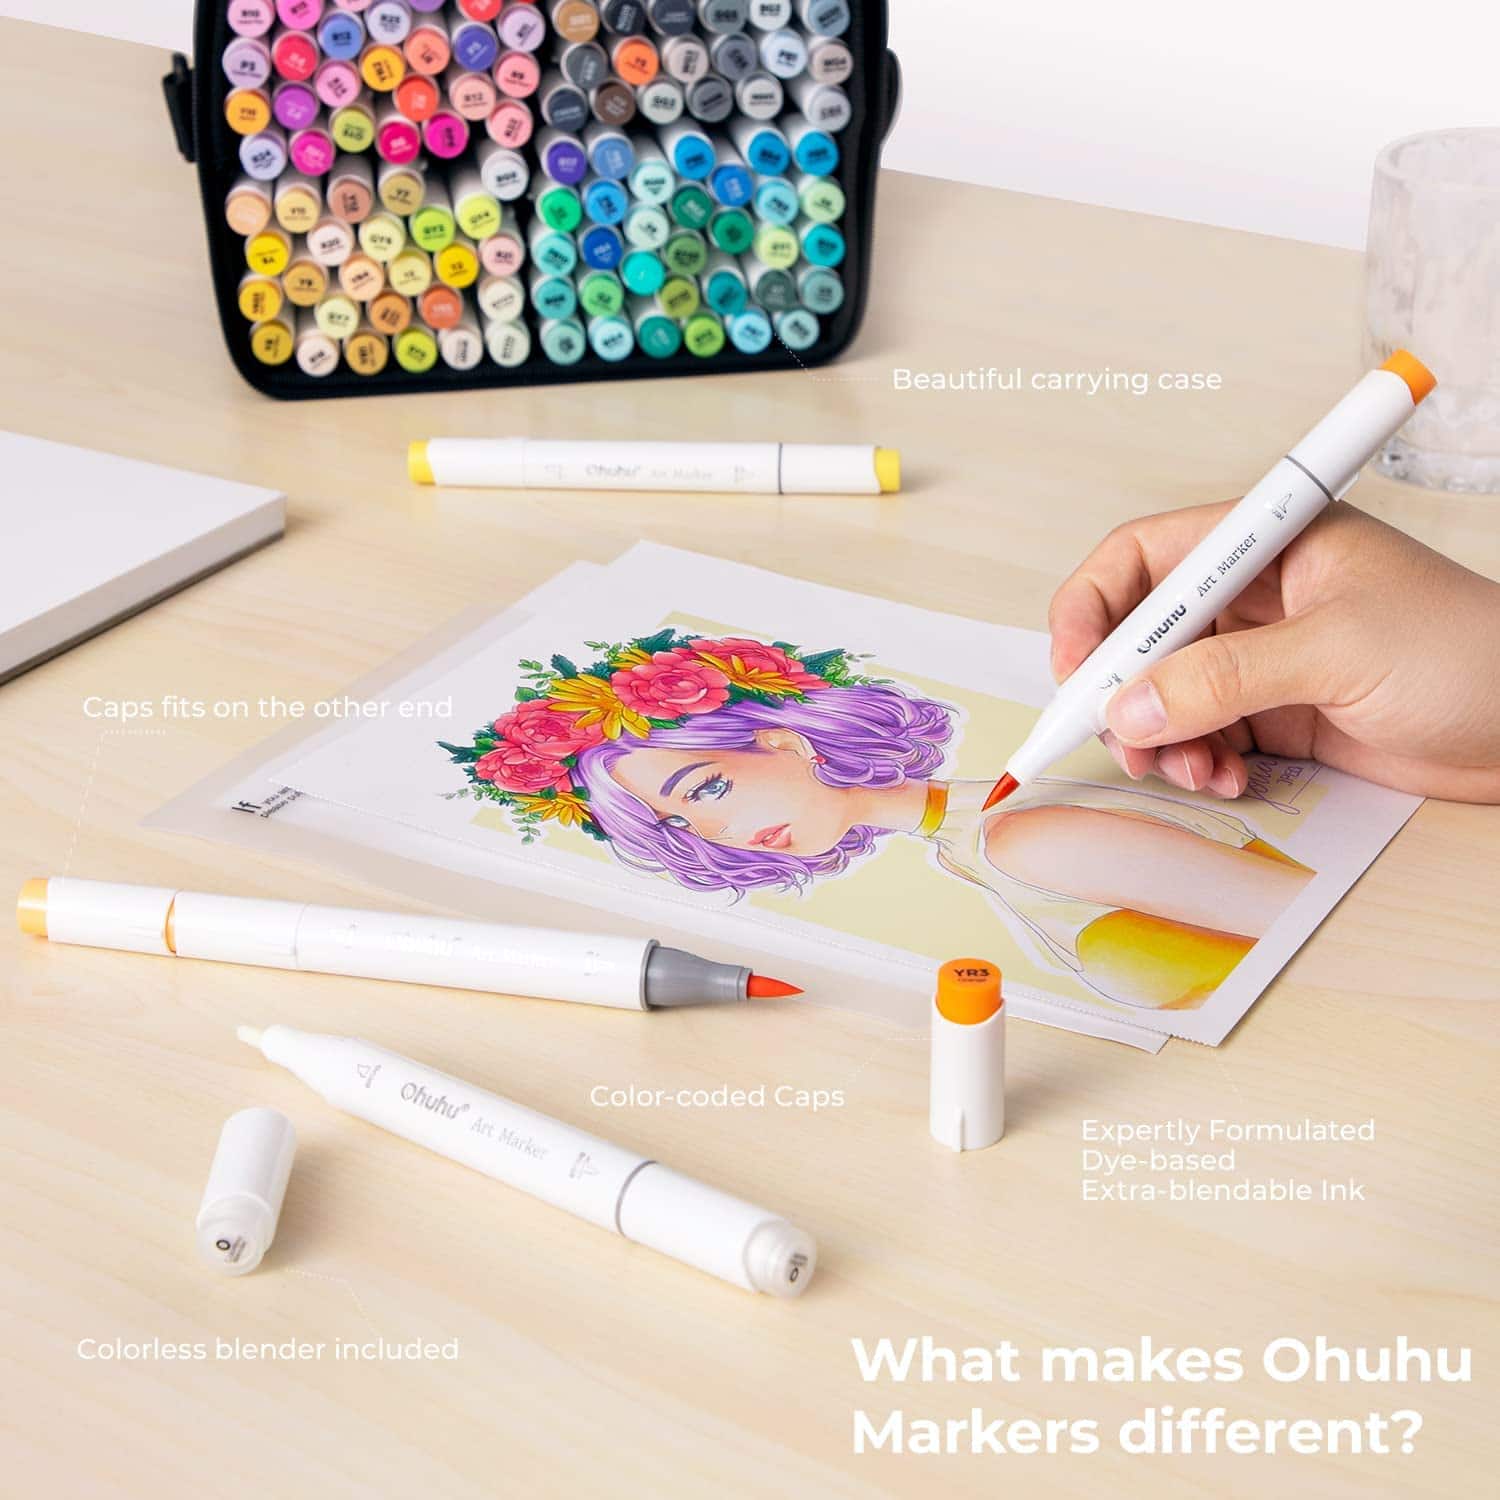 Ohuhu® 120-Color Alcohol-Based Brush-and-Chisel Dual-Tip Art Marker Set